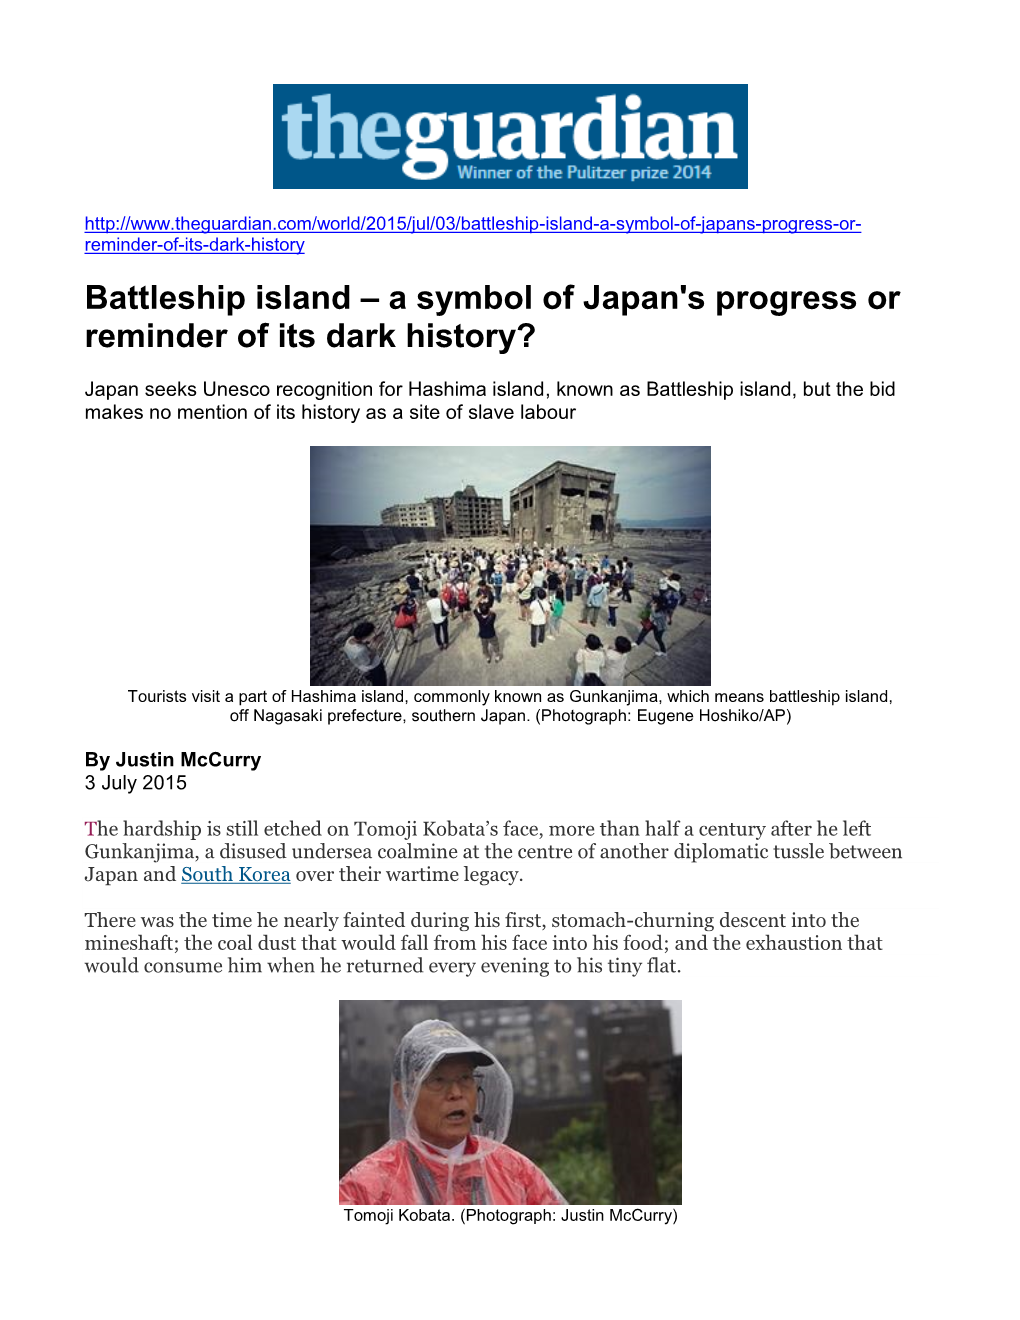 Battleship Island – a Symbol of Japan's Progress Or Reminder of Its Dark History?